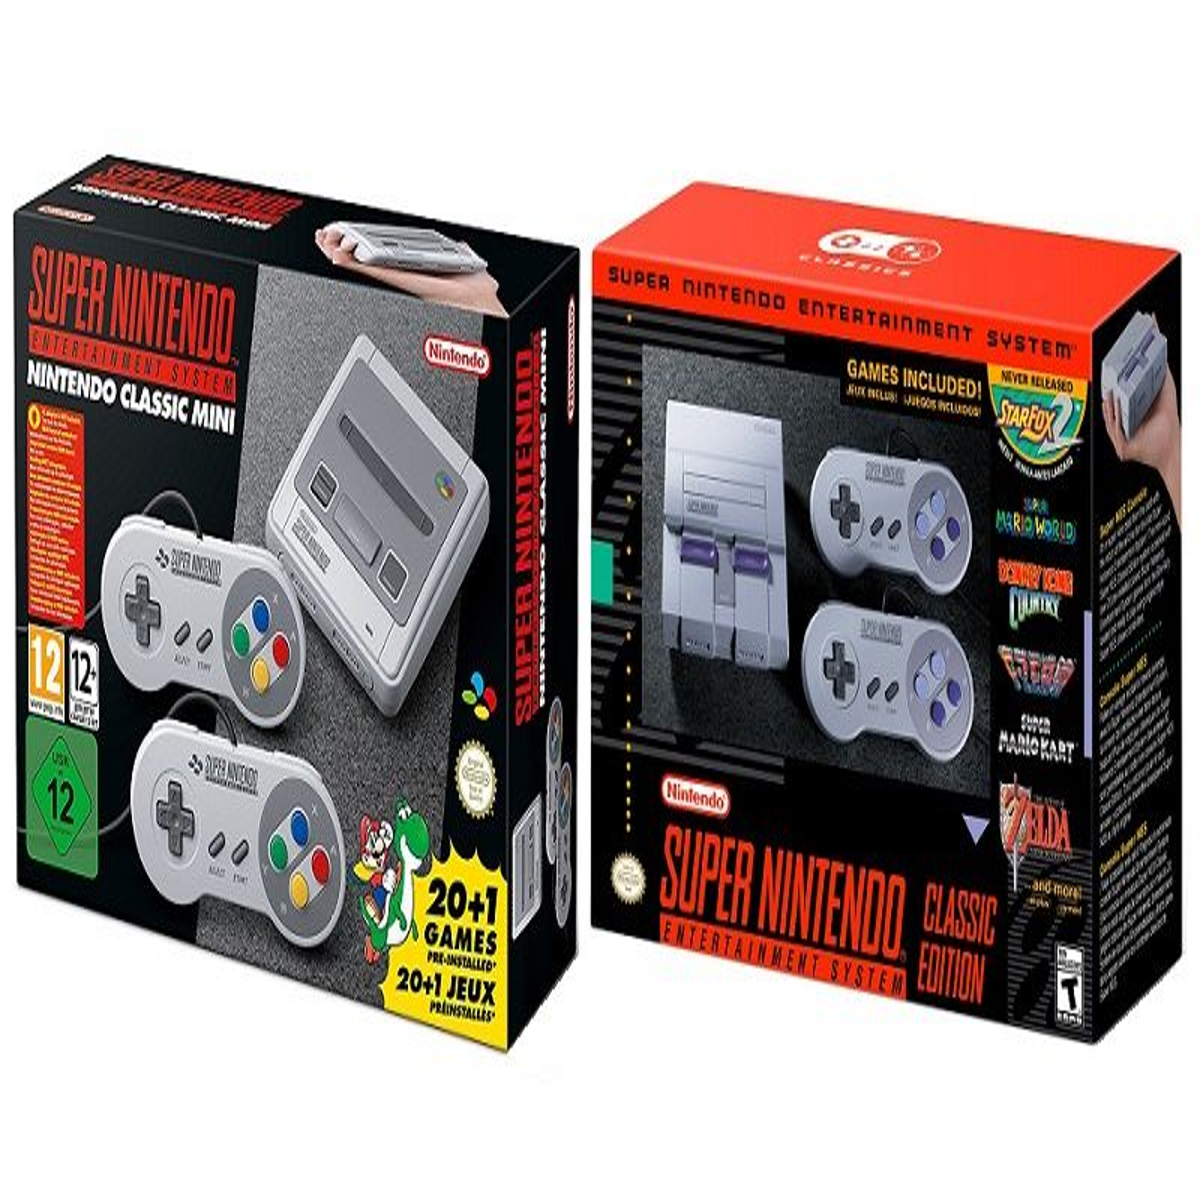 Nintendo Classic Mini: Super Nintendo Entertainment System - The console of  a generation! 